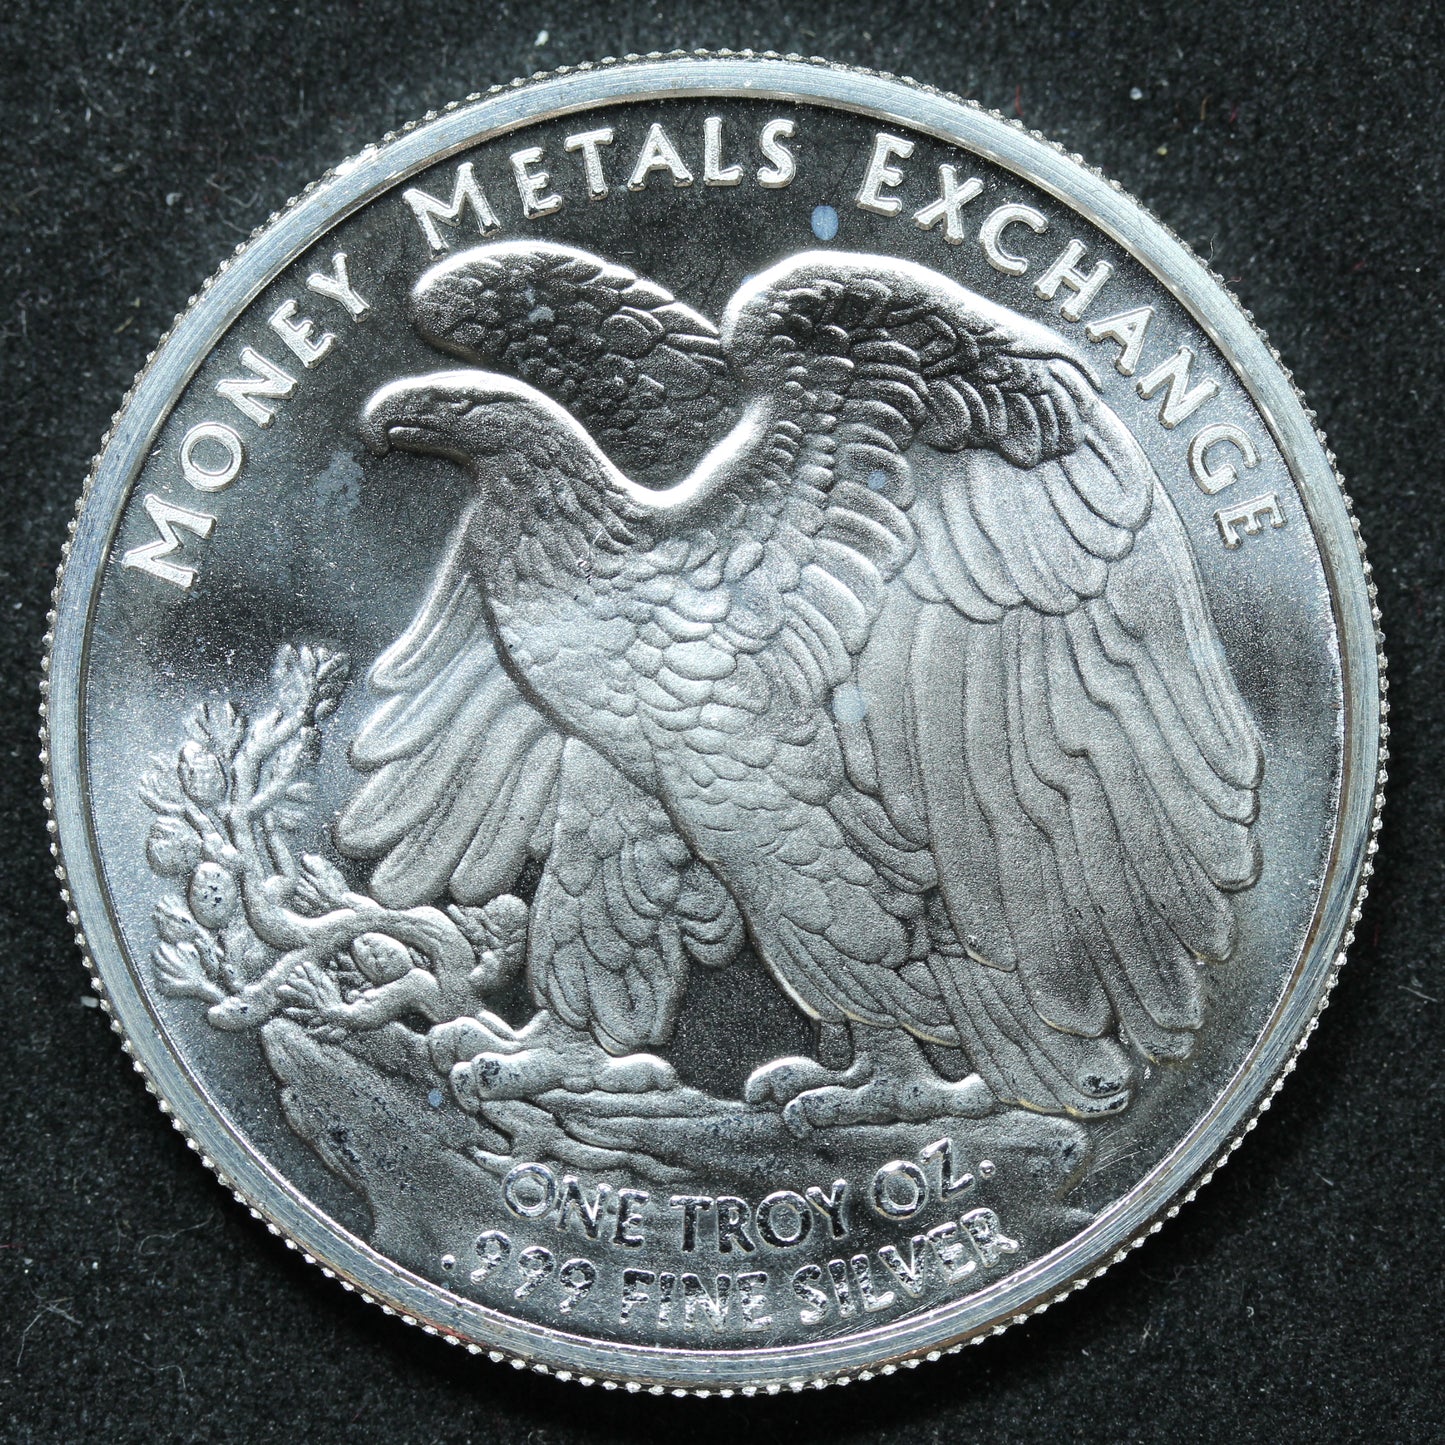 1 oz .999 Fine Silver Round - Money Metals Exchange - Lady Liberty